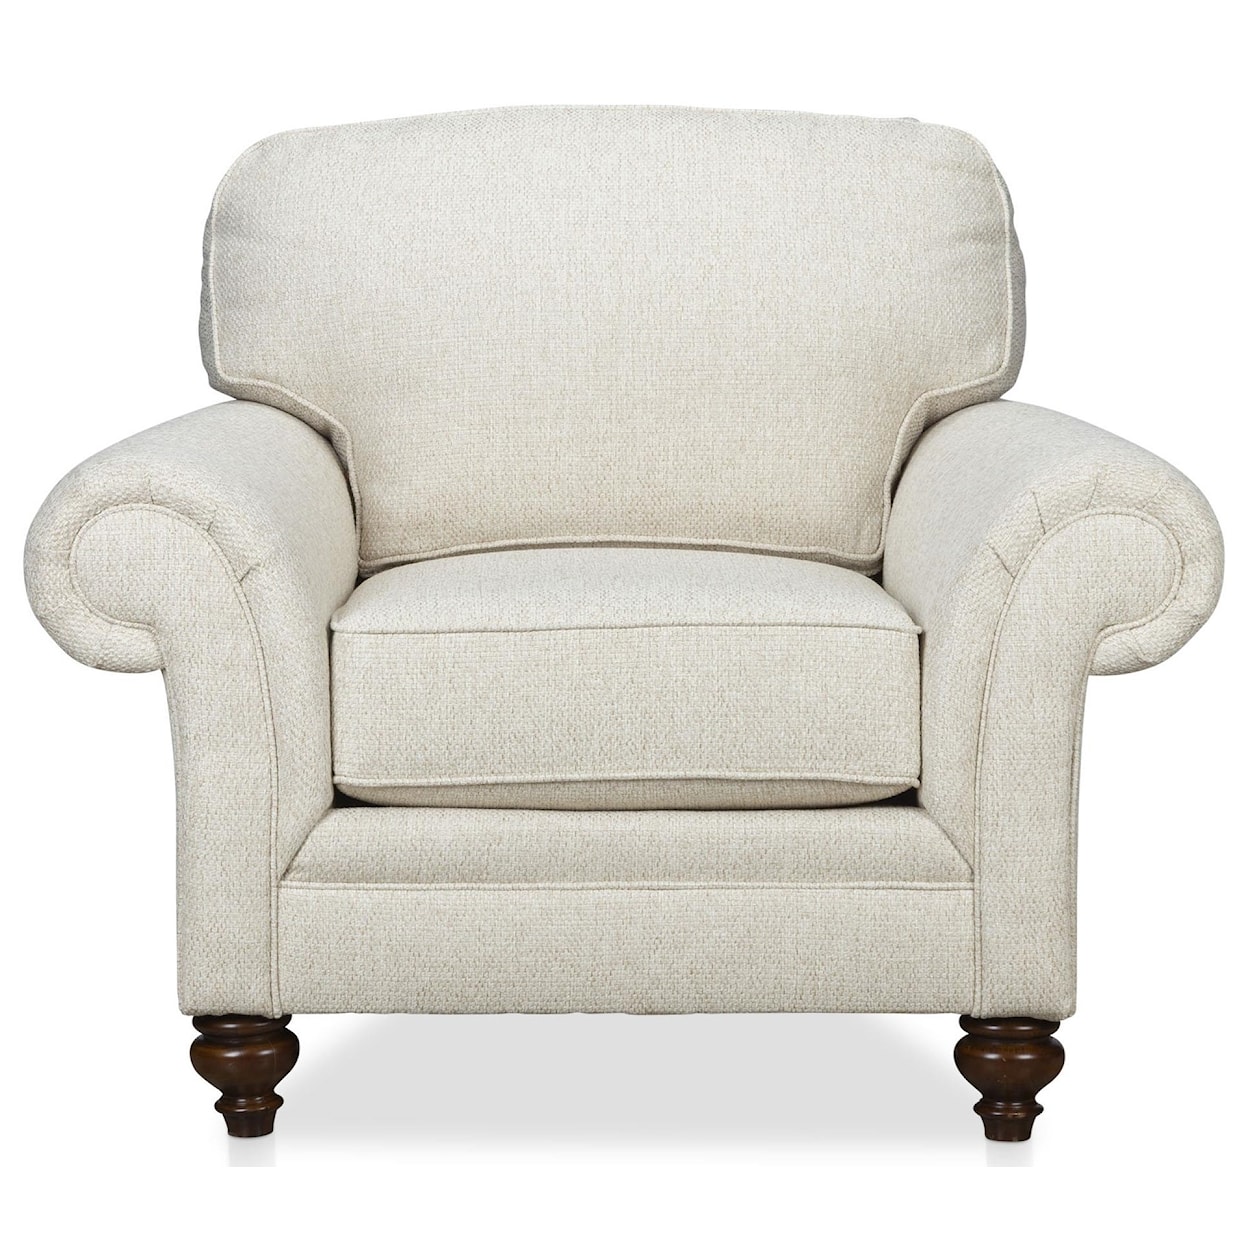 Stone & Leigh Furniture Larissa Rolled Arm Chair